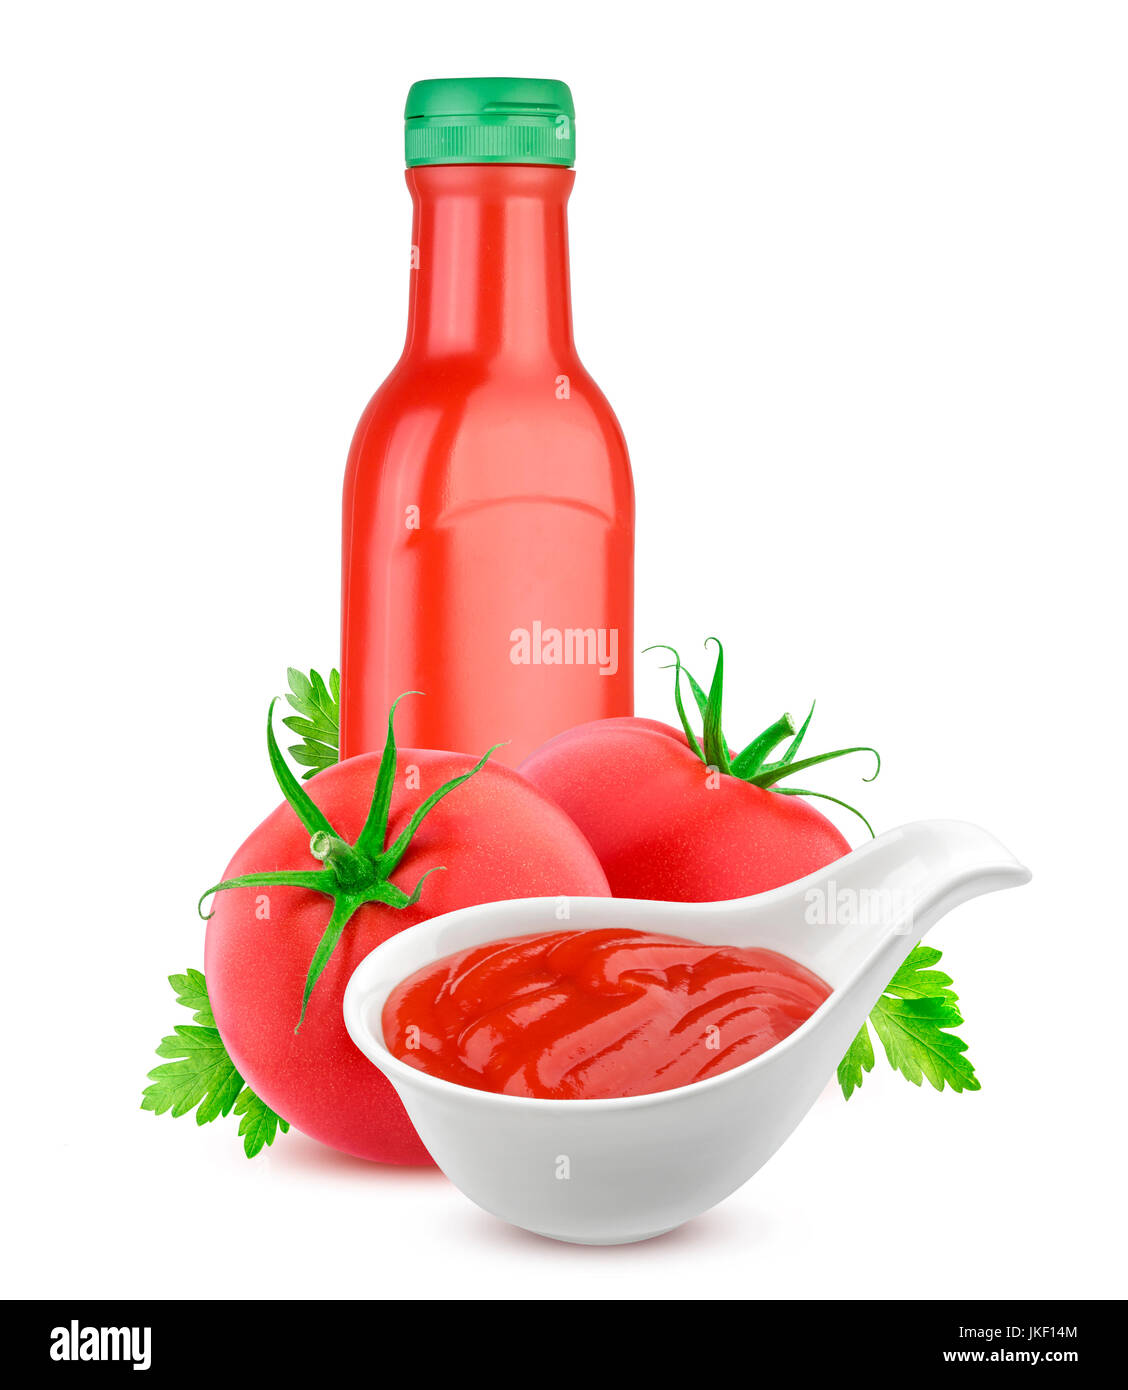 Tomato ketchup bottle and fresh tomatoes isolated on white background Stock Photo